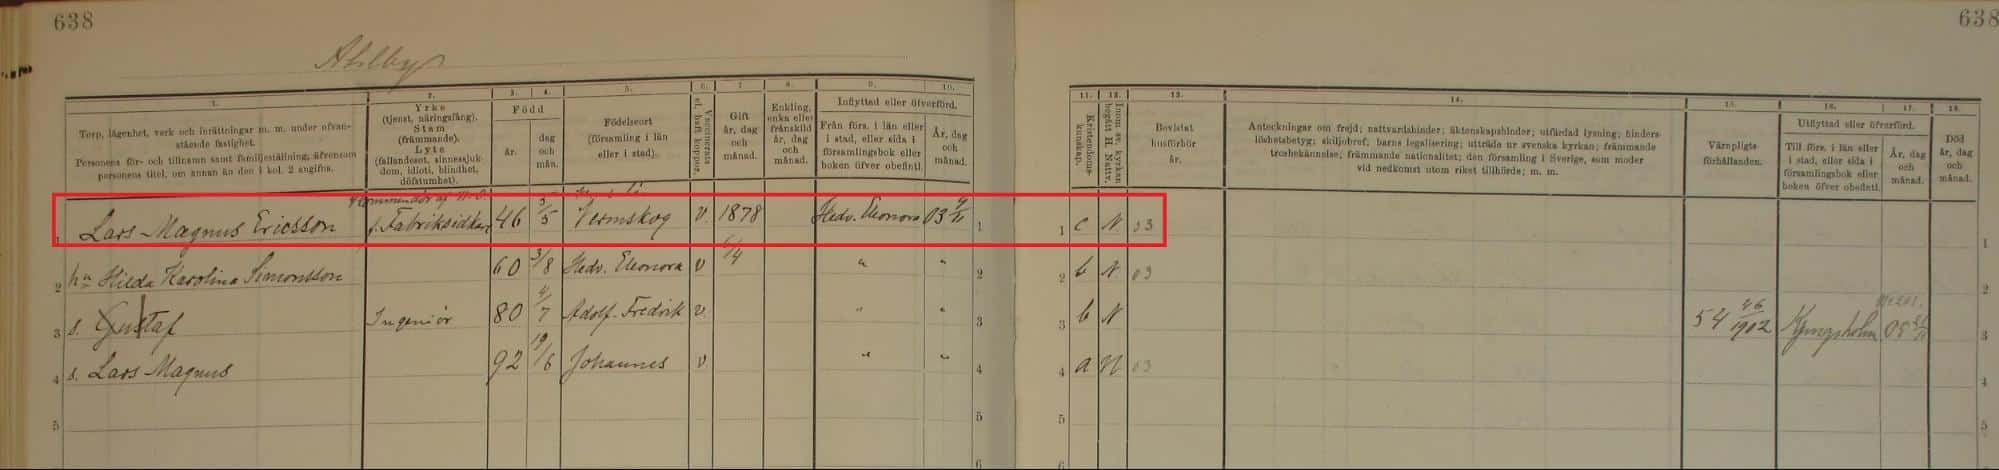 Sweden Household Examination Record of Lars Ericsson [Credit: MyHeritage Sweden Household Examination Books, 1820-1947]